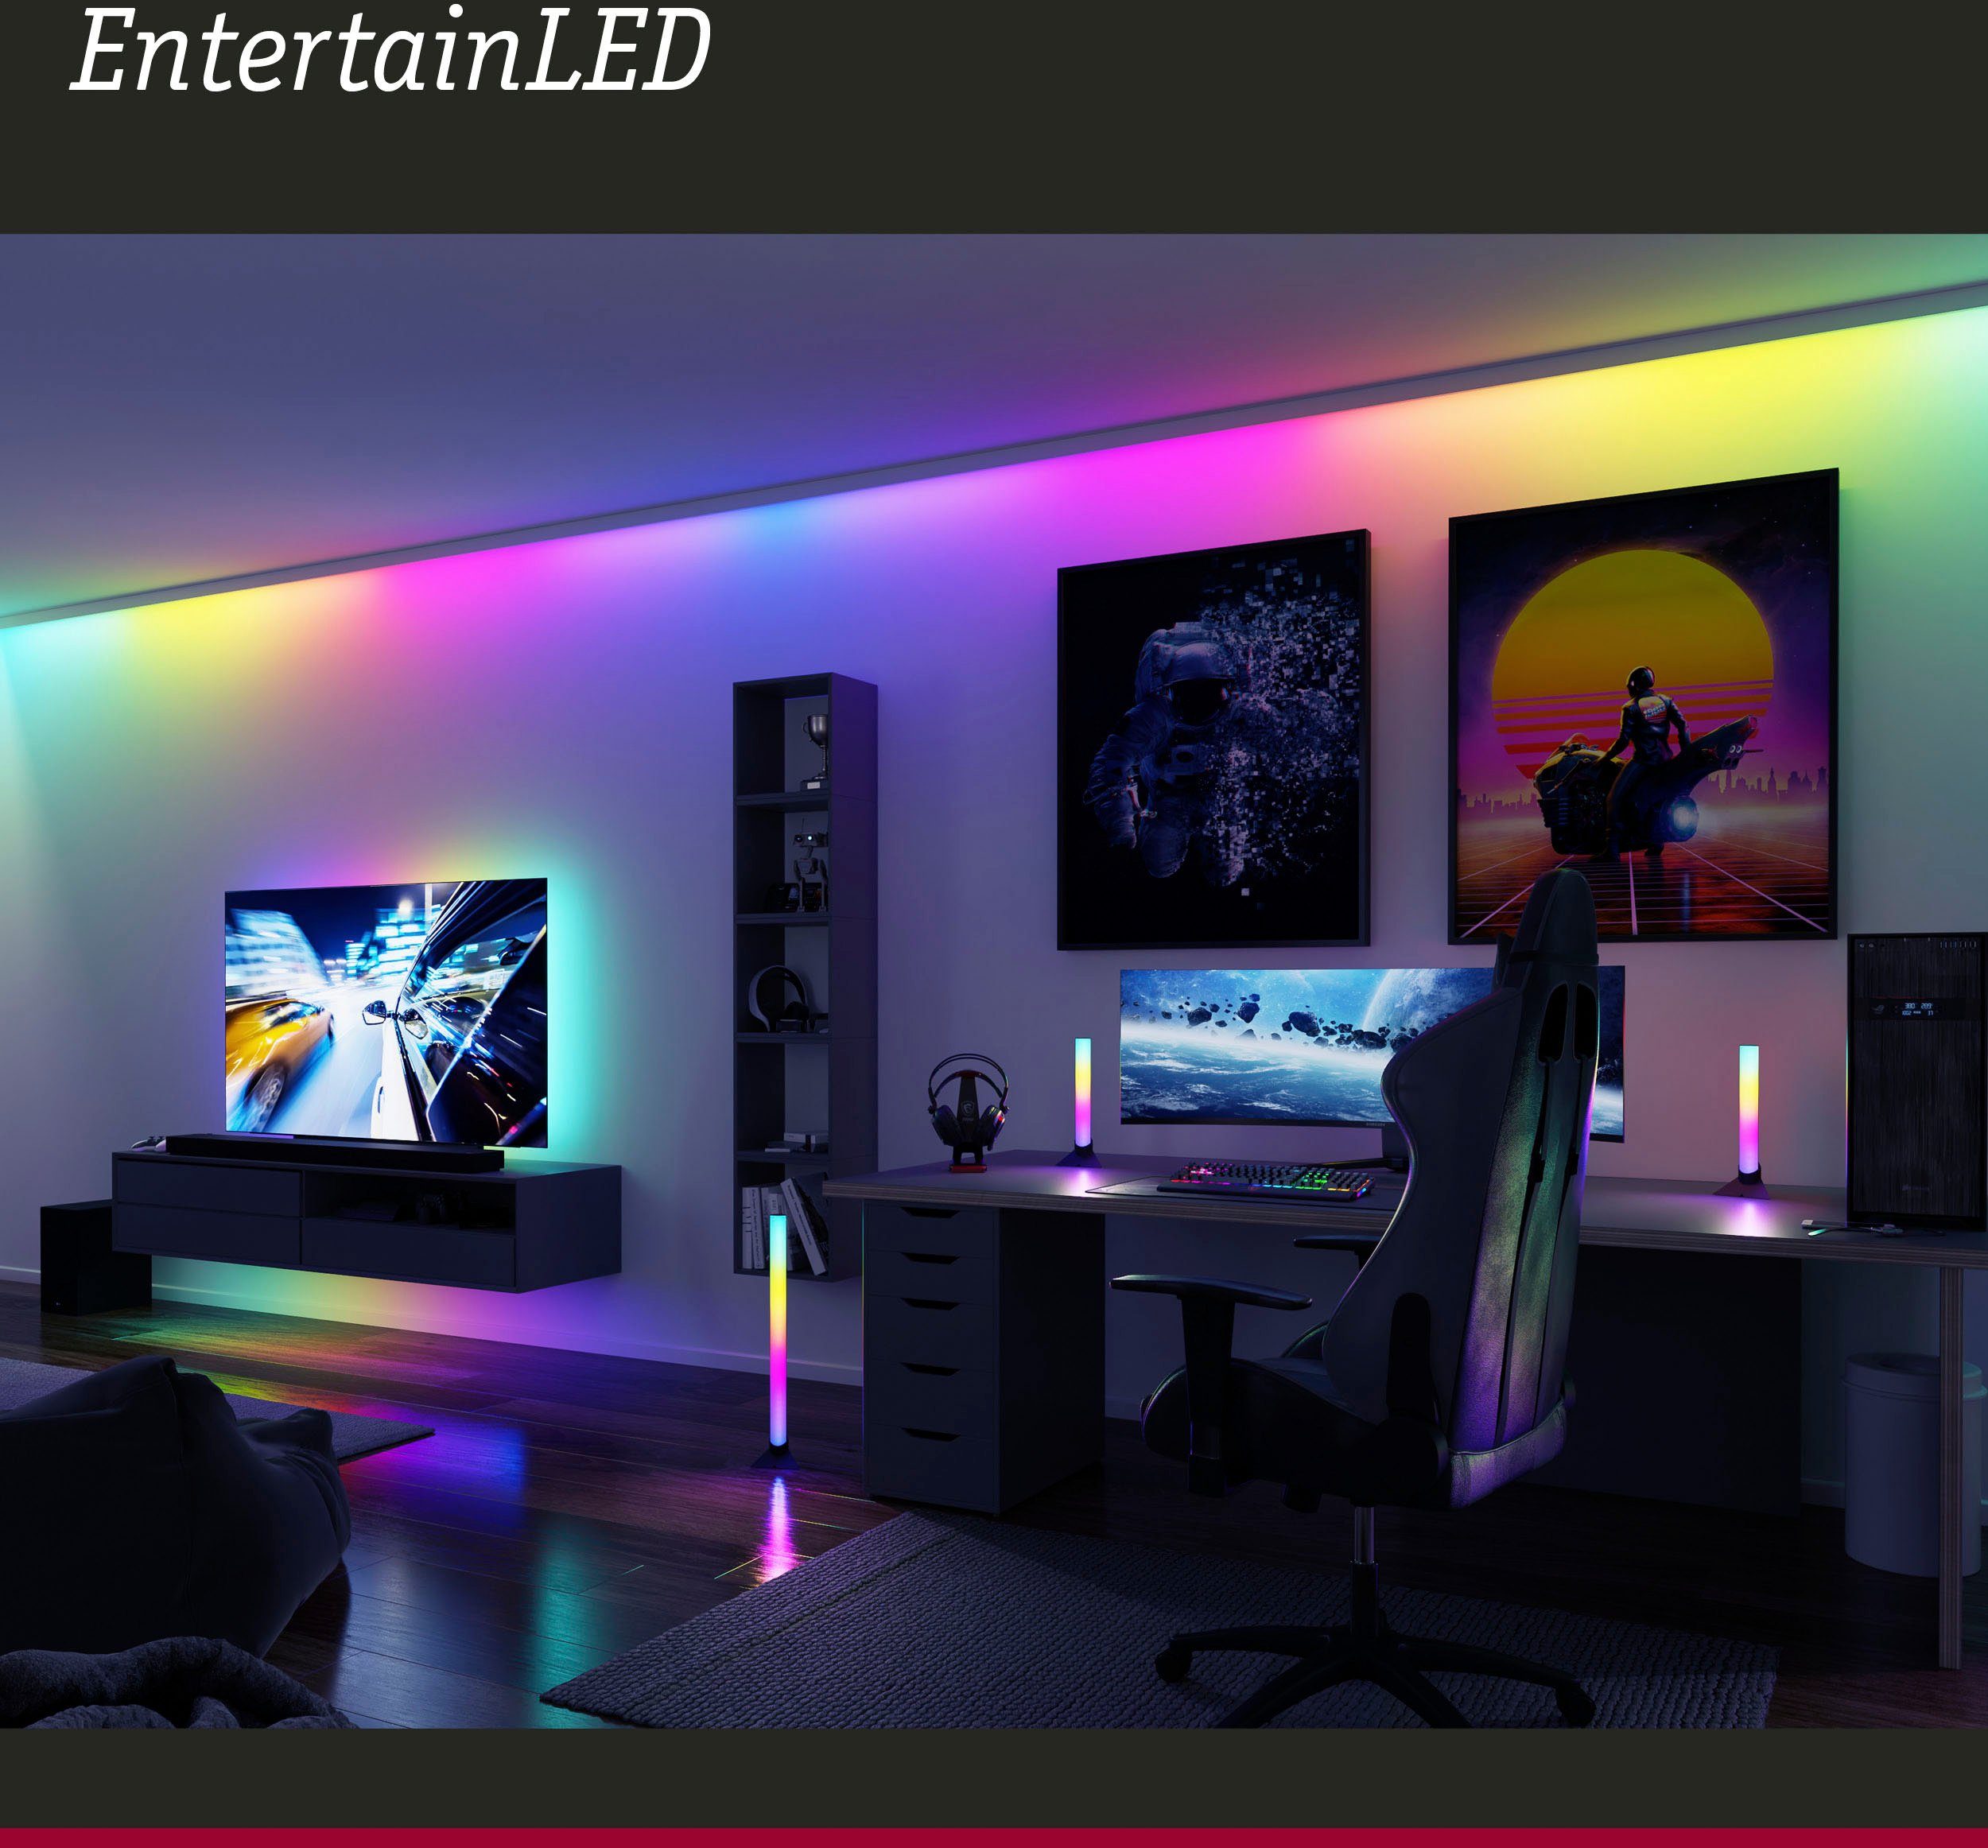 55 2m Rainbow Zoll Dynamic LED LED-Streifen 3,5W, TV-Beleuchtung Strip USB RGB Paulmann 1-flammig